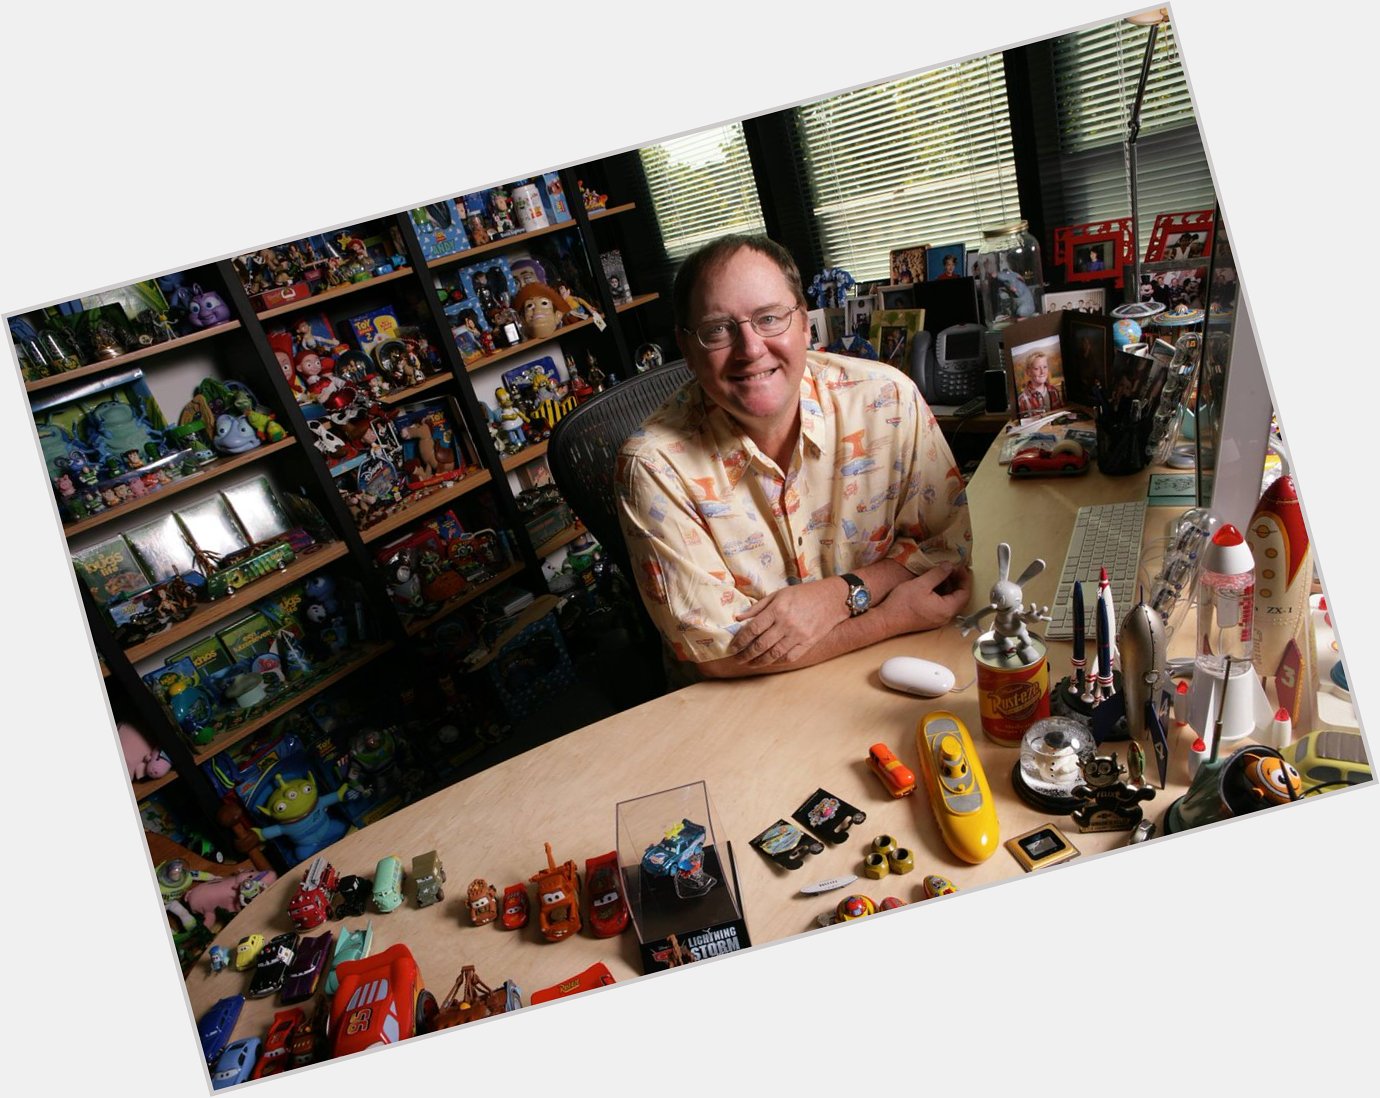 Join us in wishing director and Pixar animator John Lasseter a very happy birthday! 